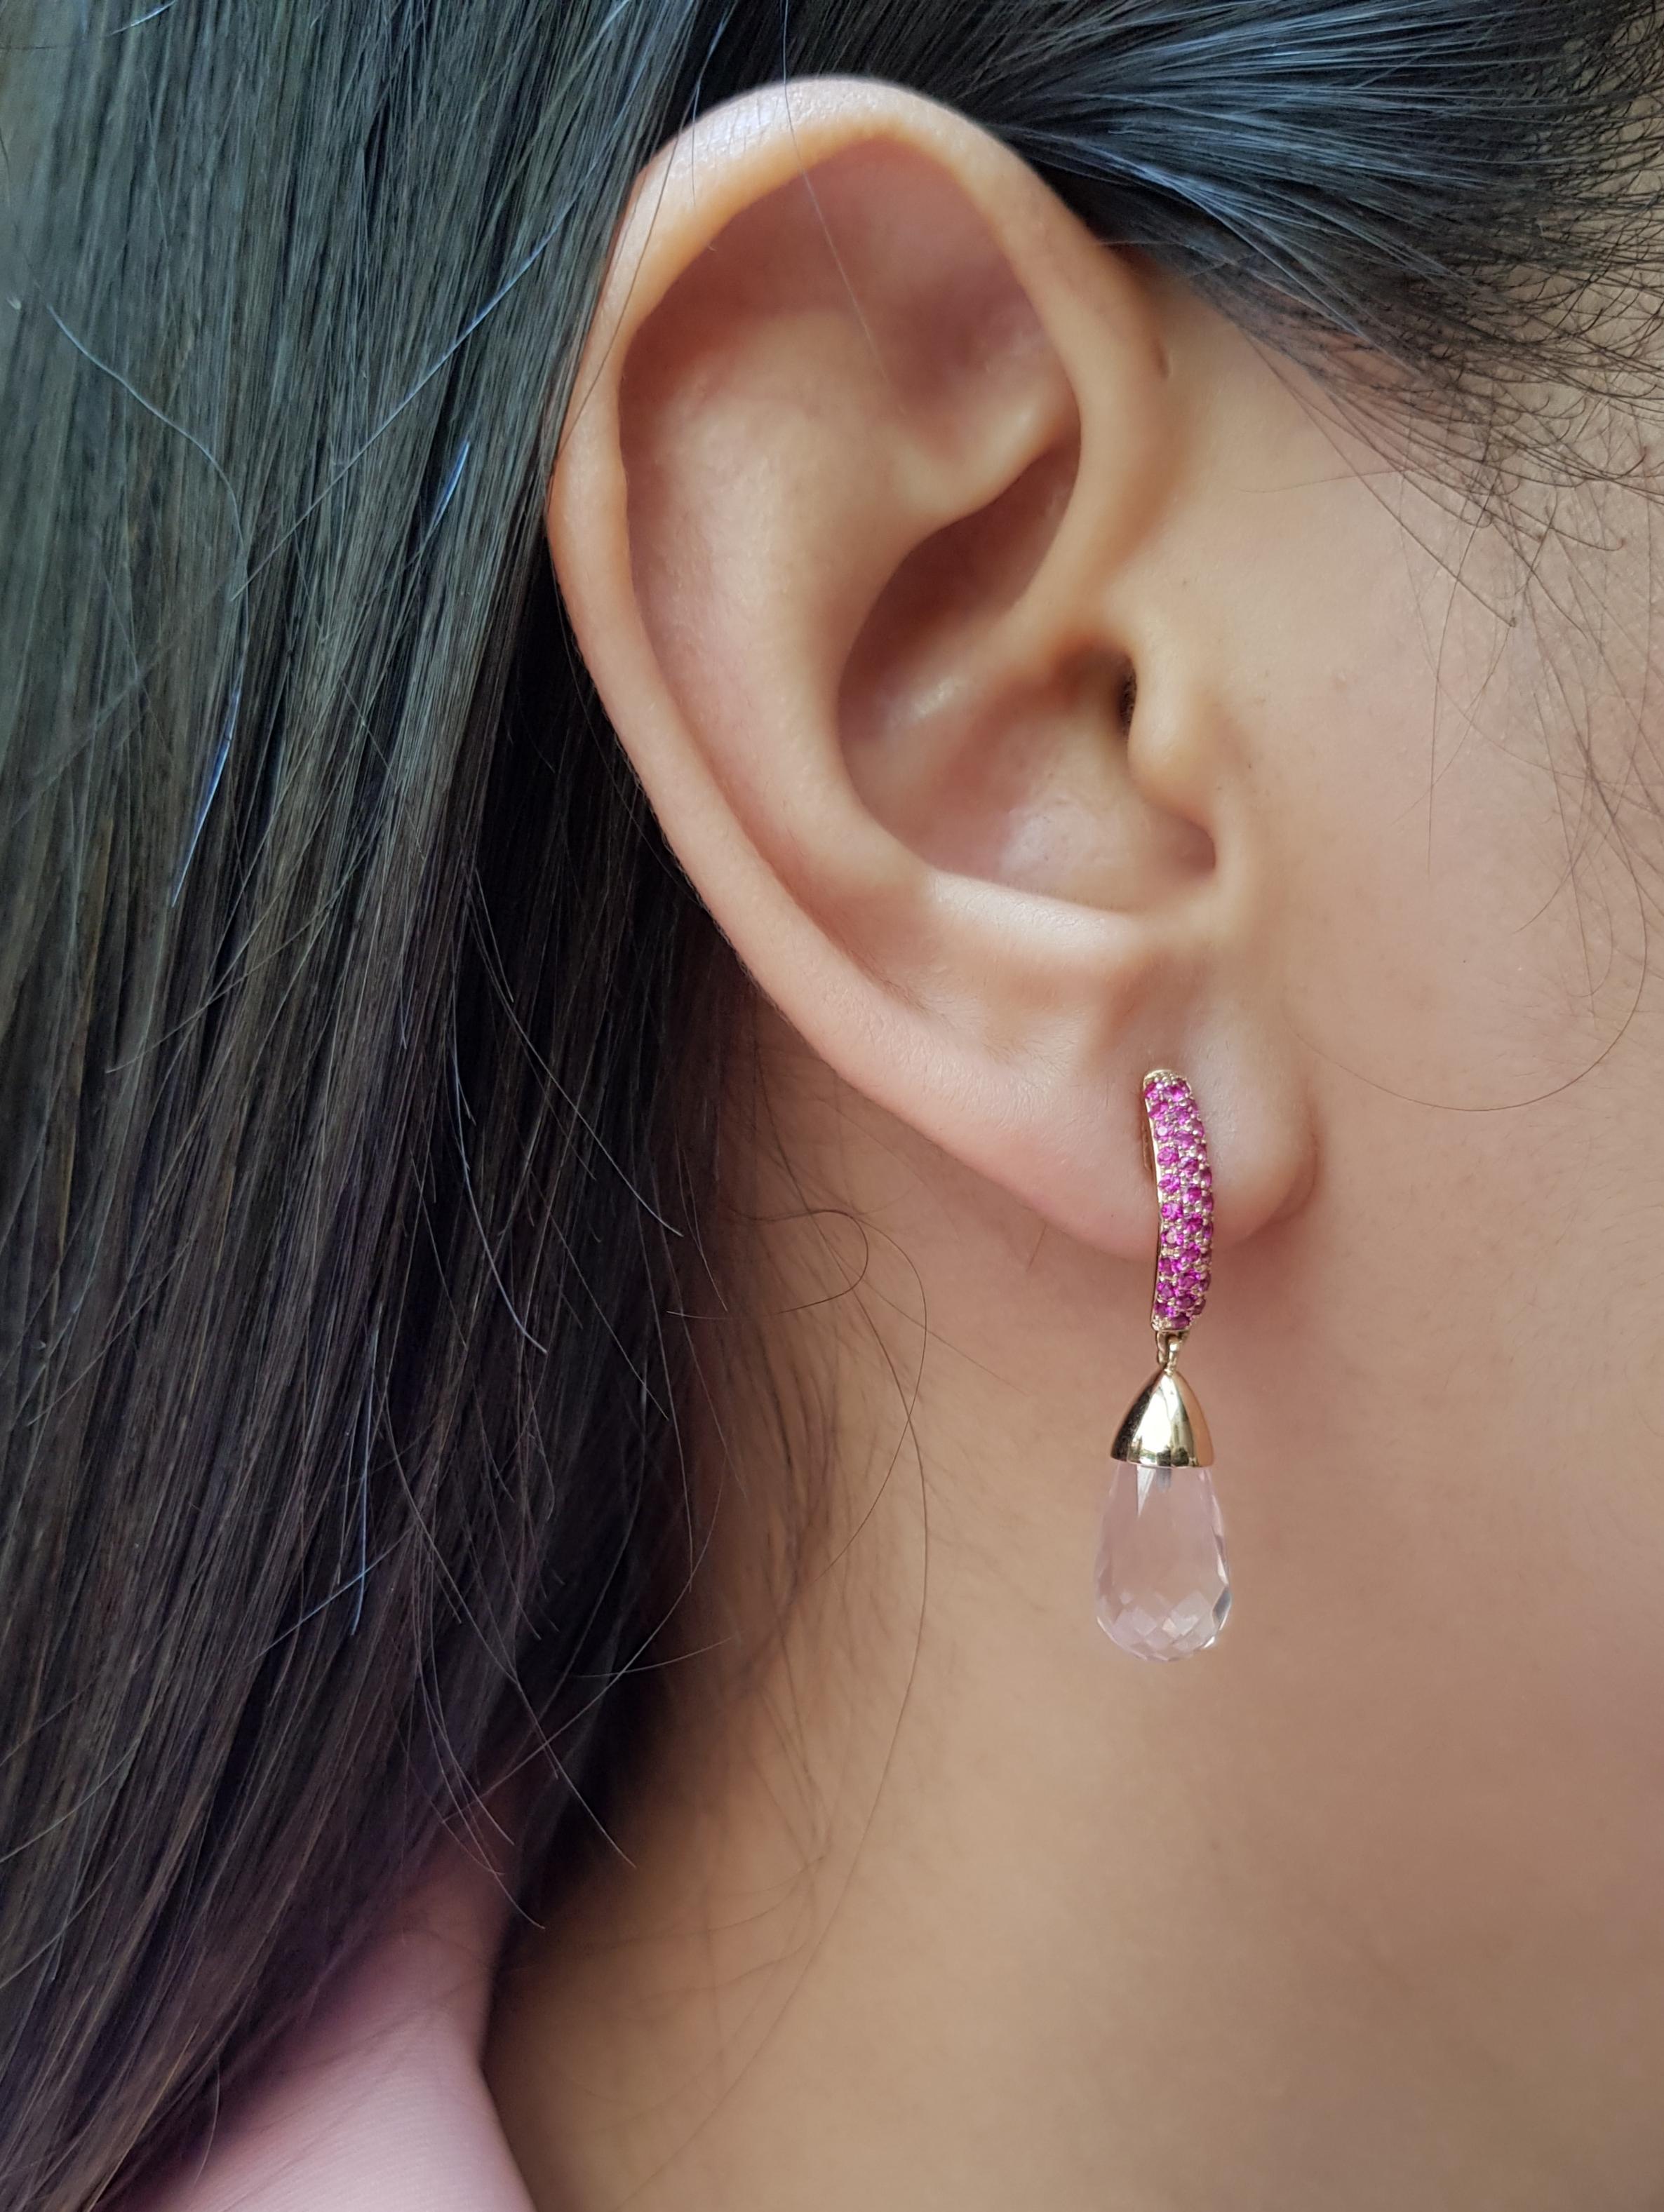 Rose Quartz 10.85 carats with Pink Sapphire 0.52 carat Earrings set in 18 Kara Rose Gold Settings

Width: 0.8 cm
Length: 3.2 cm 

